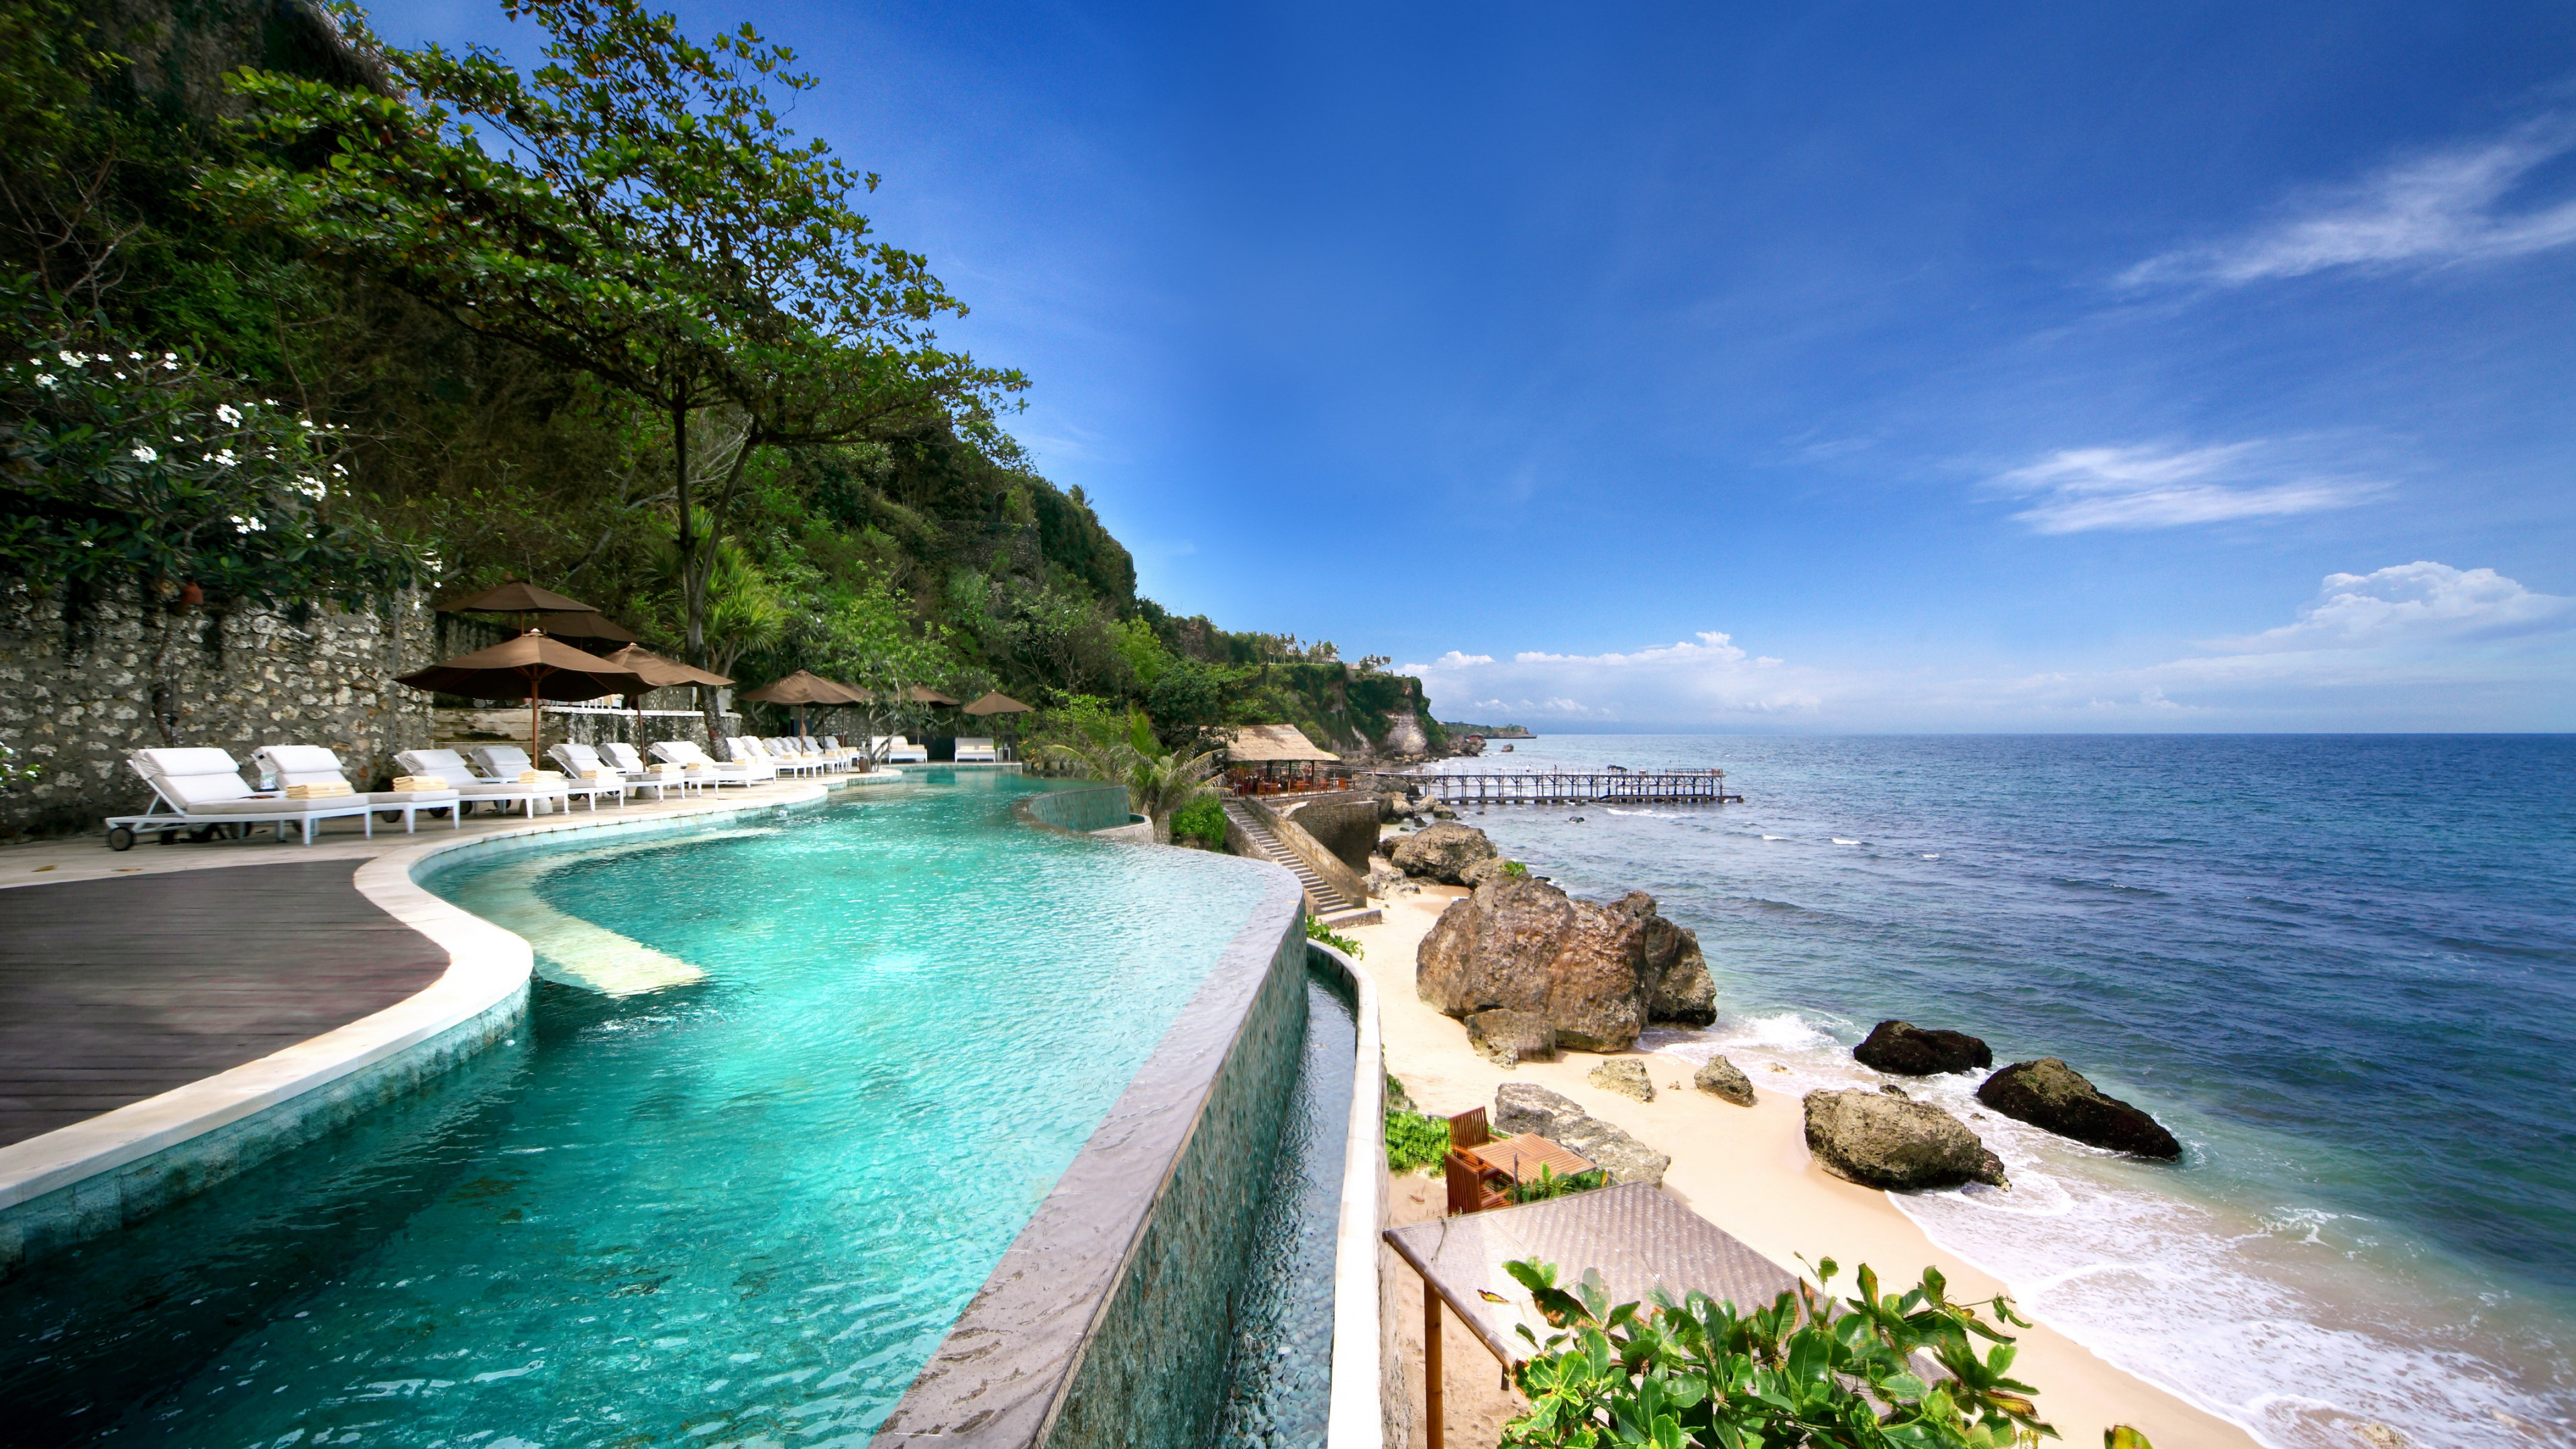 Wallpaper Ayana Resort And Spa Bali Jimbaran Best Hotels Tourism Travel Resort Booking Vacation Pool Architecture 4608